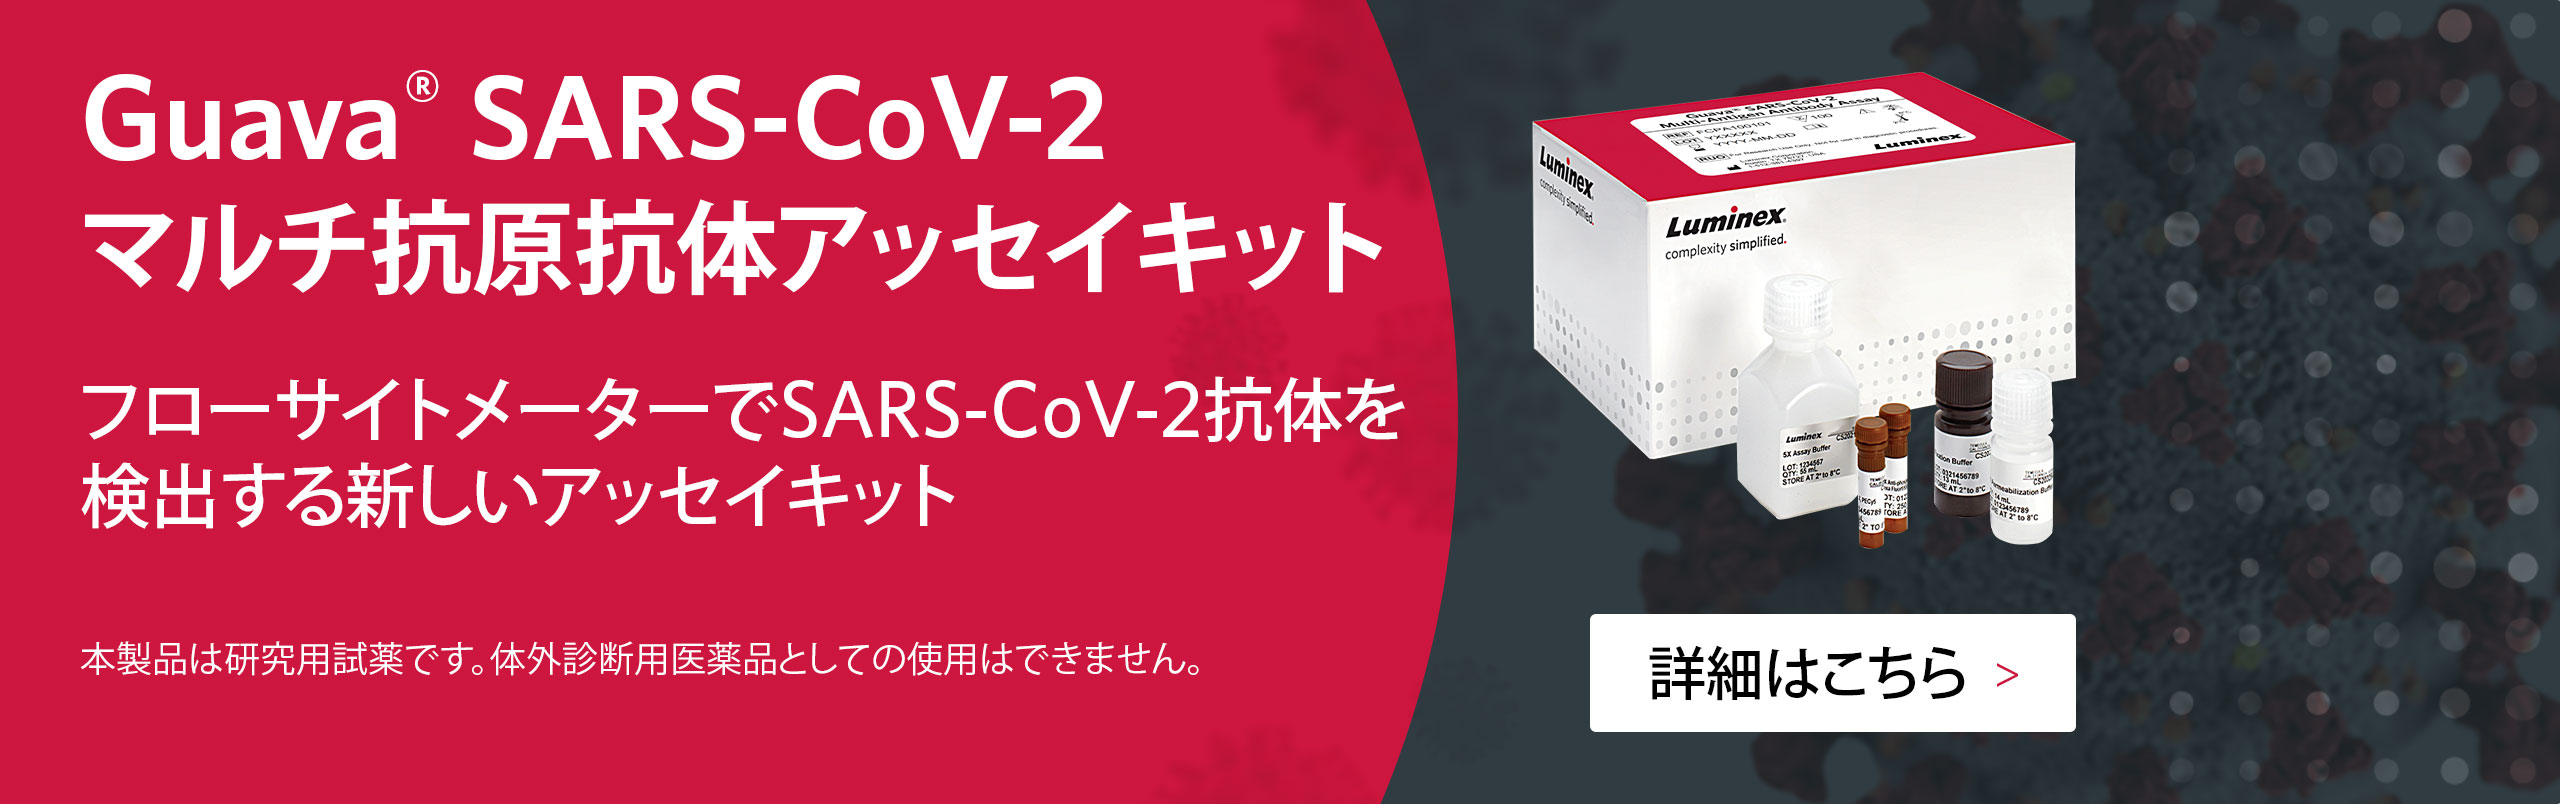 Guava® SARS-CoV-2 Mutli-Antigen Antibody Assay is now available!